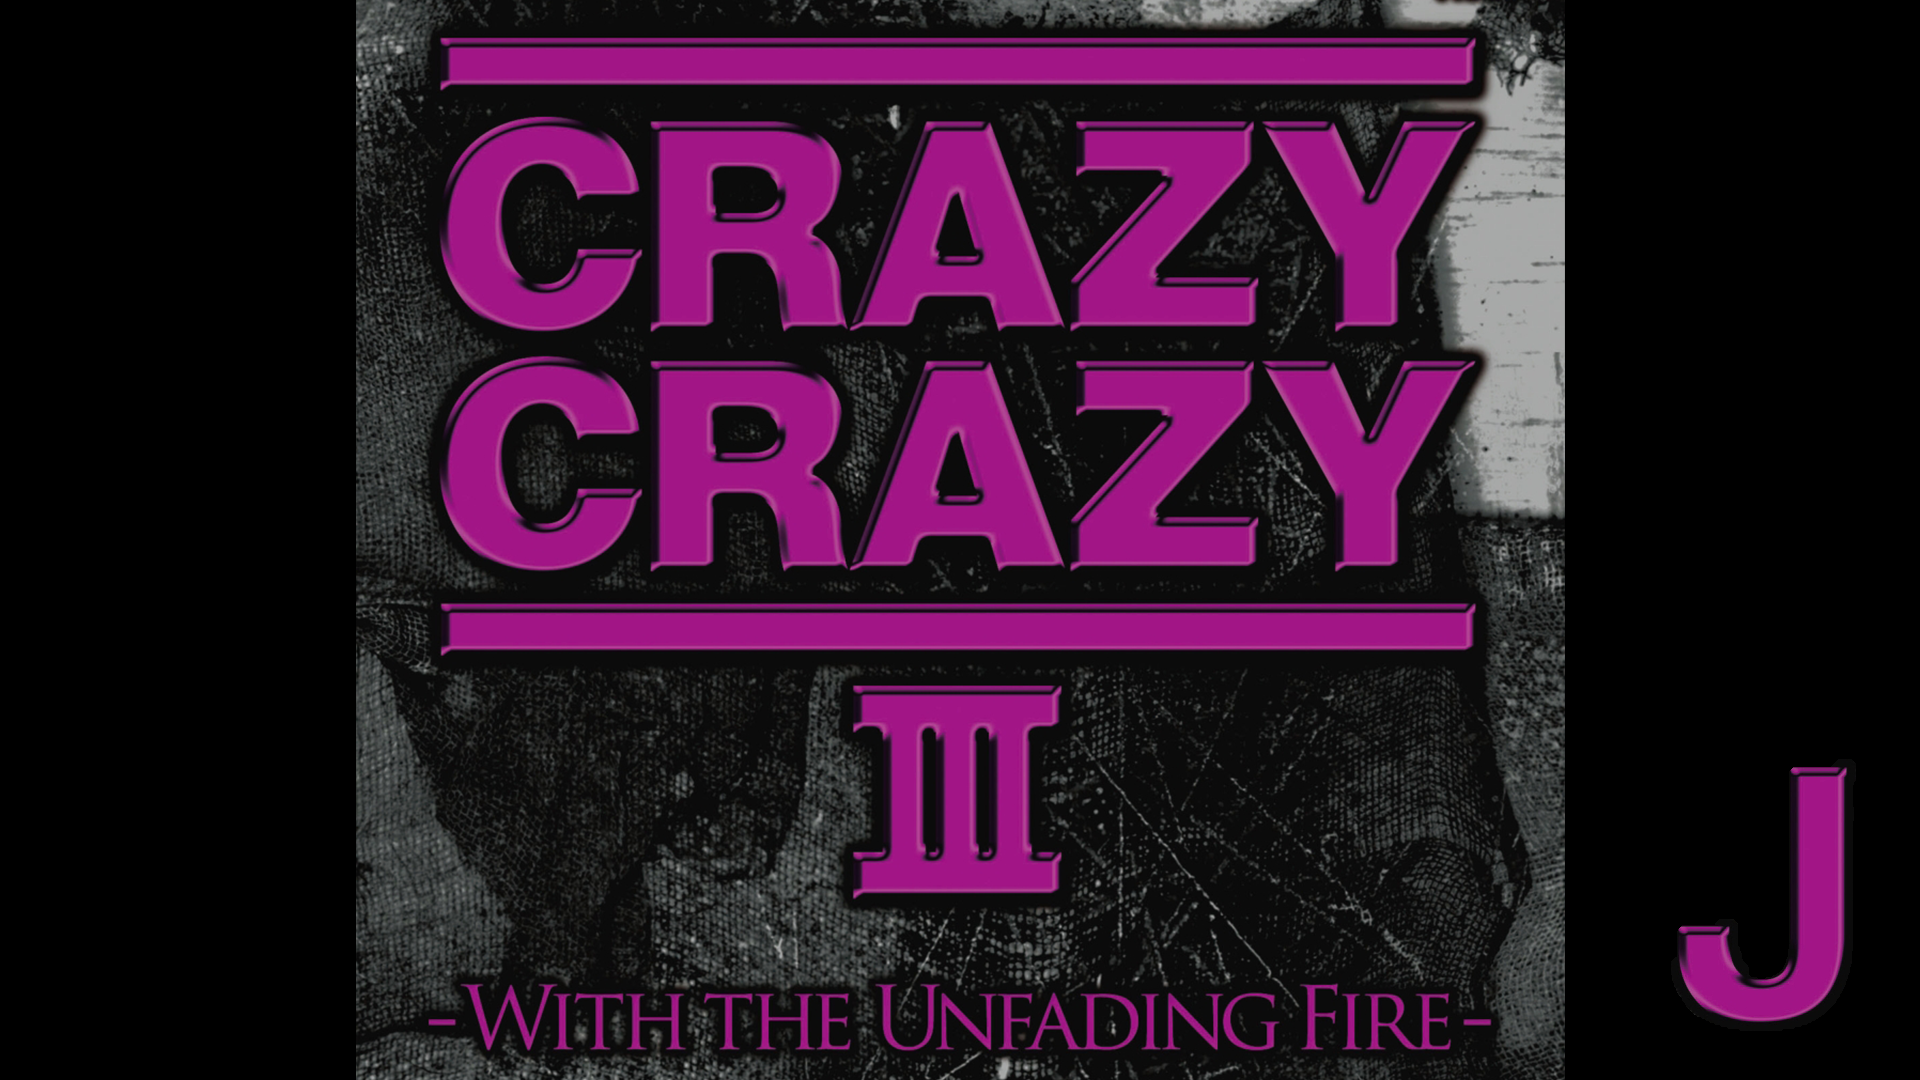 CRAZY CRAZY V -The eternal flames-(音楽・ライブ / 2016) - 動画配信 | U-NEXT  31日間無料トライアル